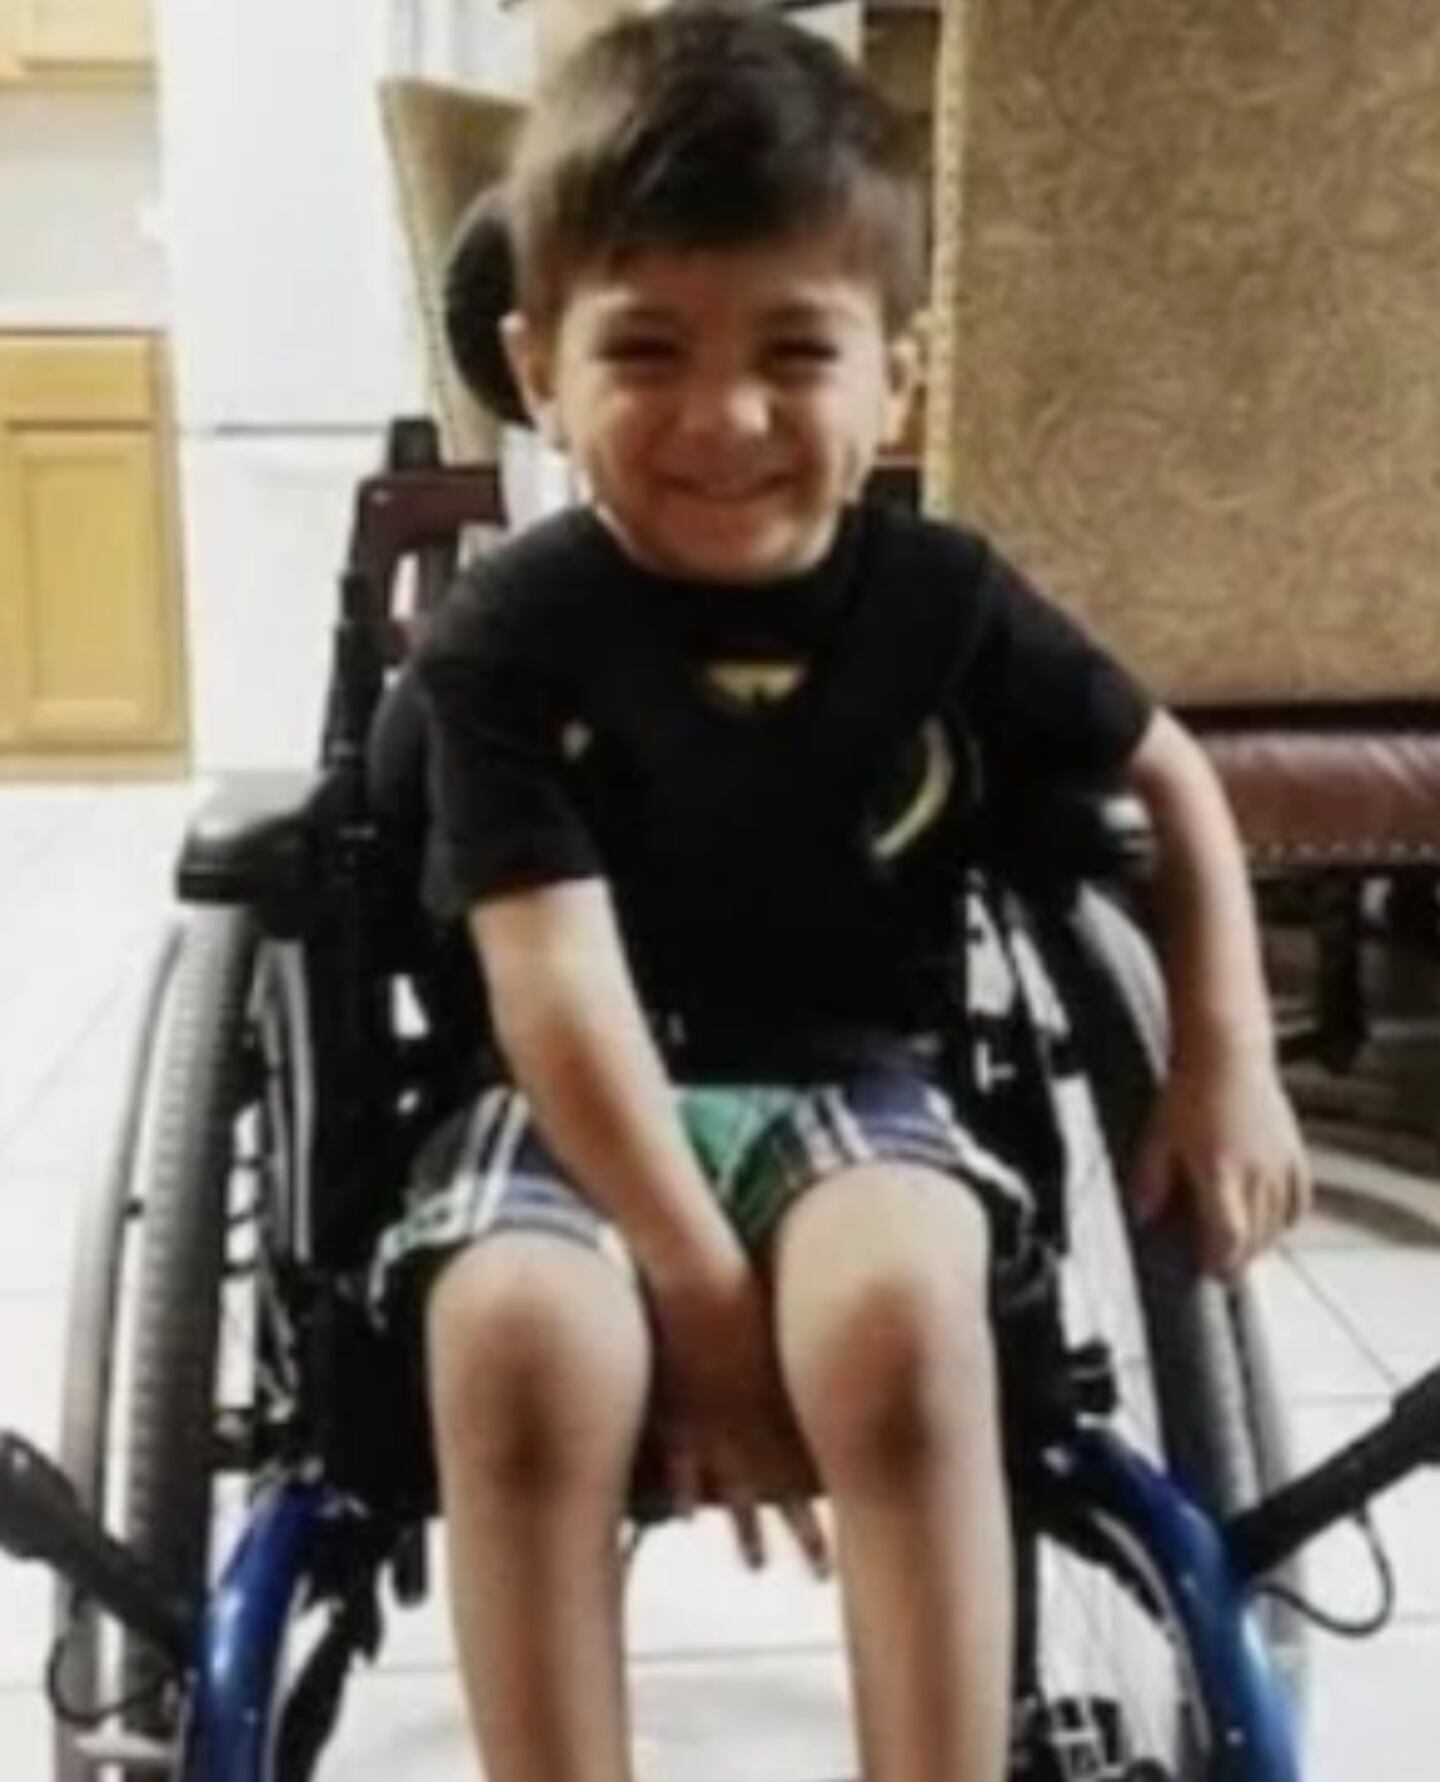 'Hero': Boy, 7, in wheelchair saves family after gas leak - NZ Herald